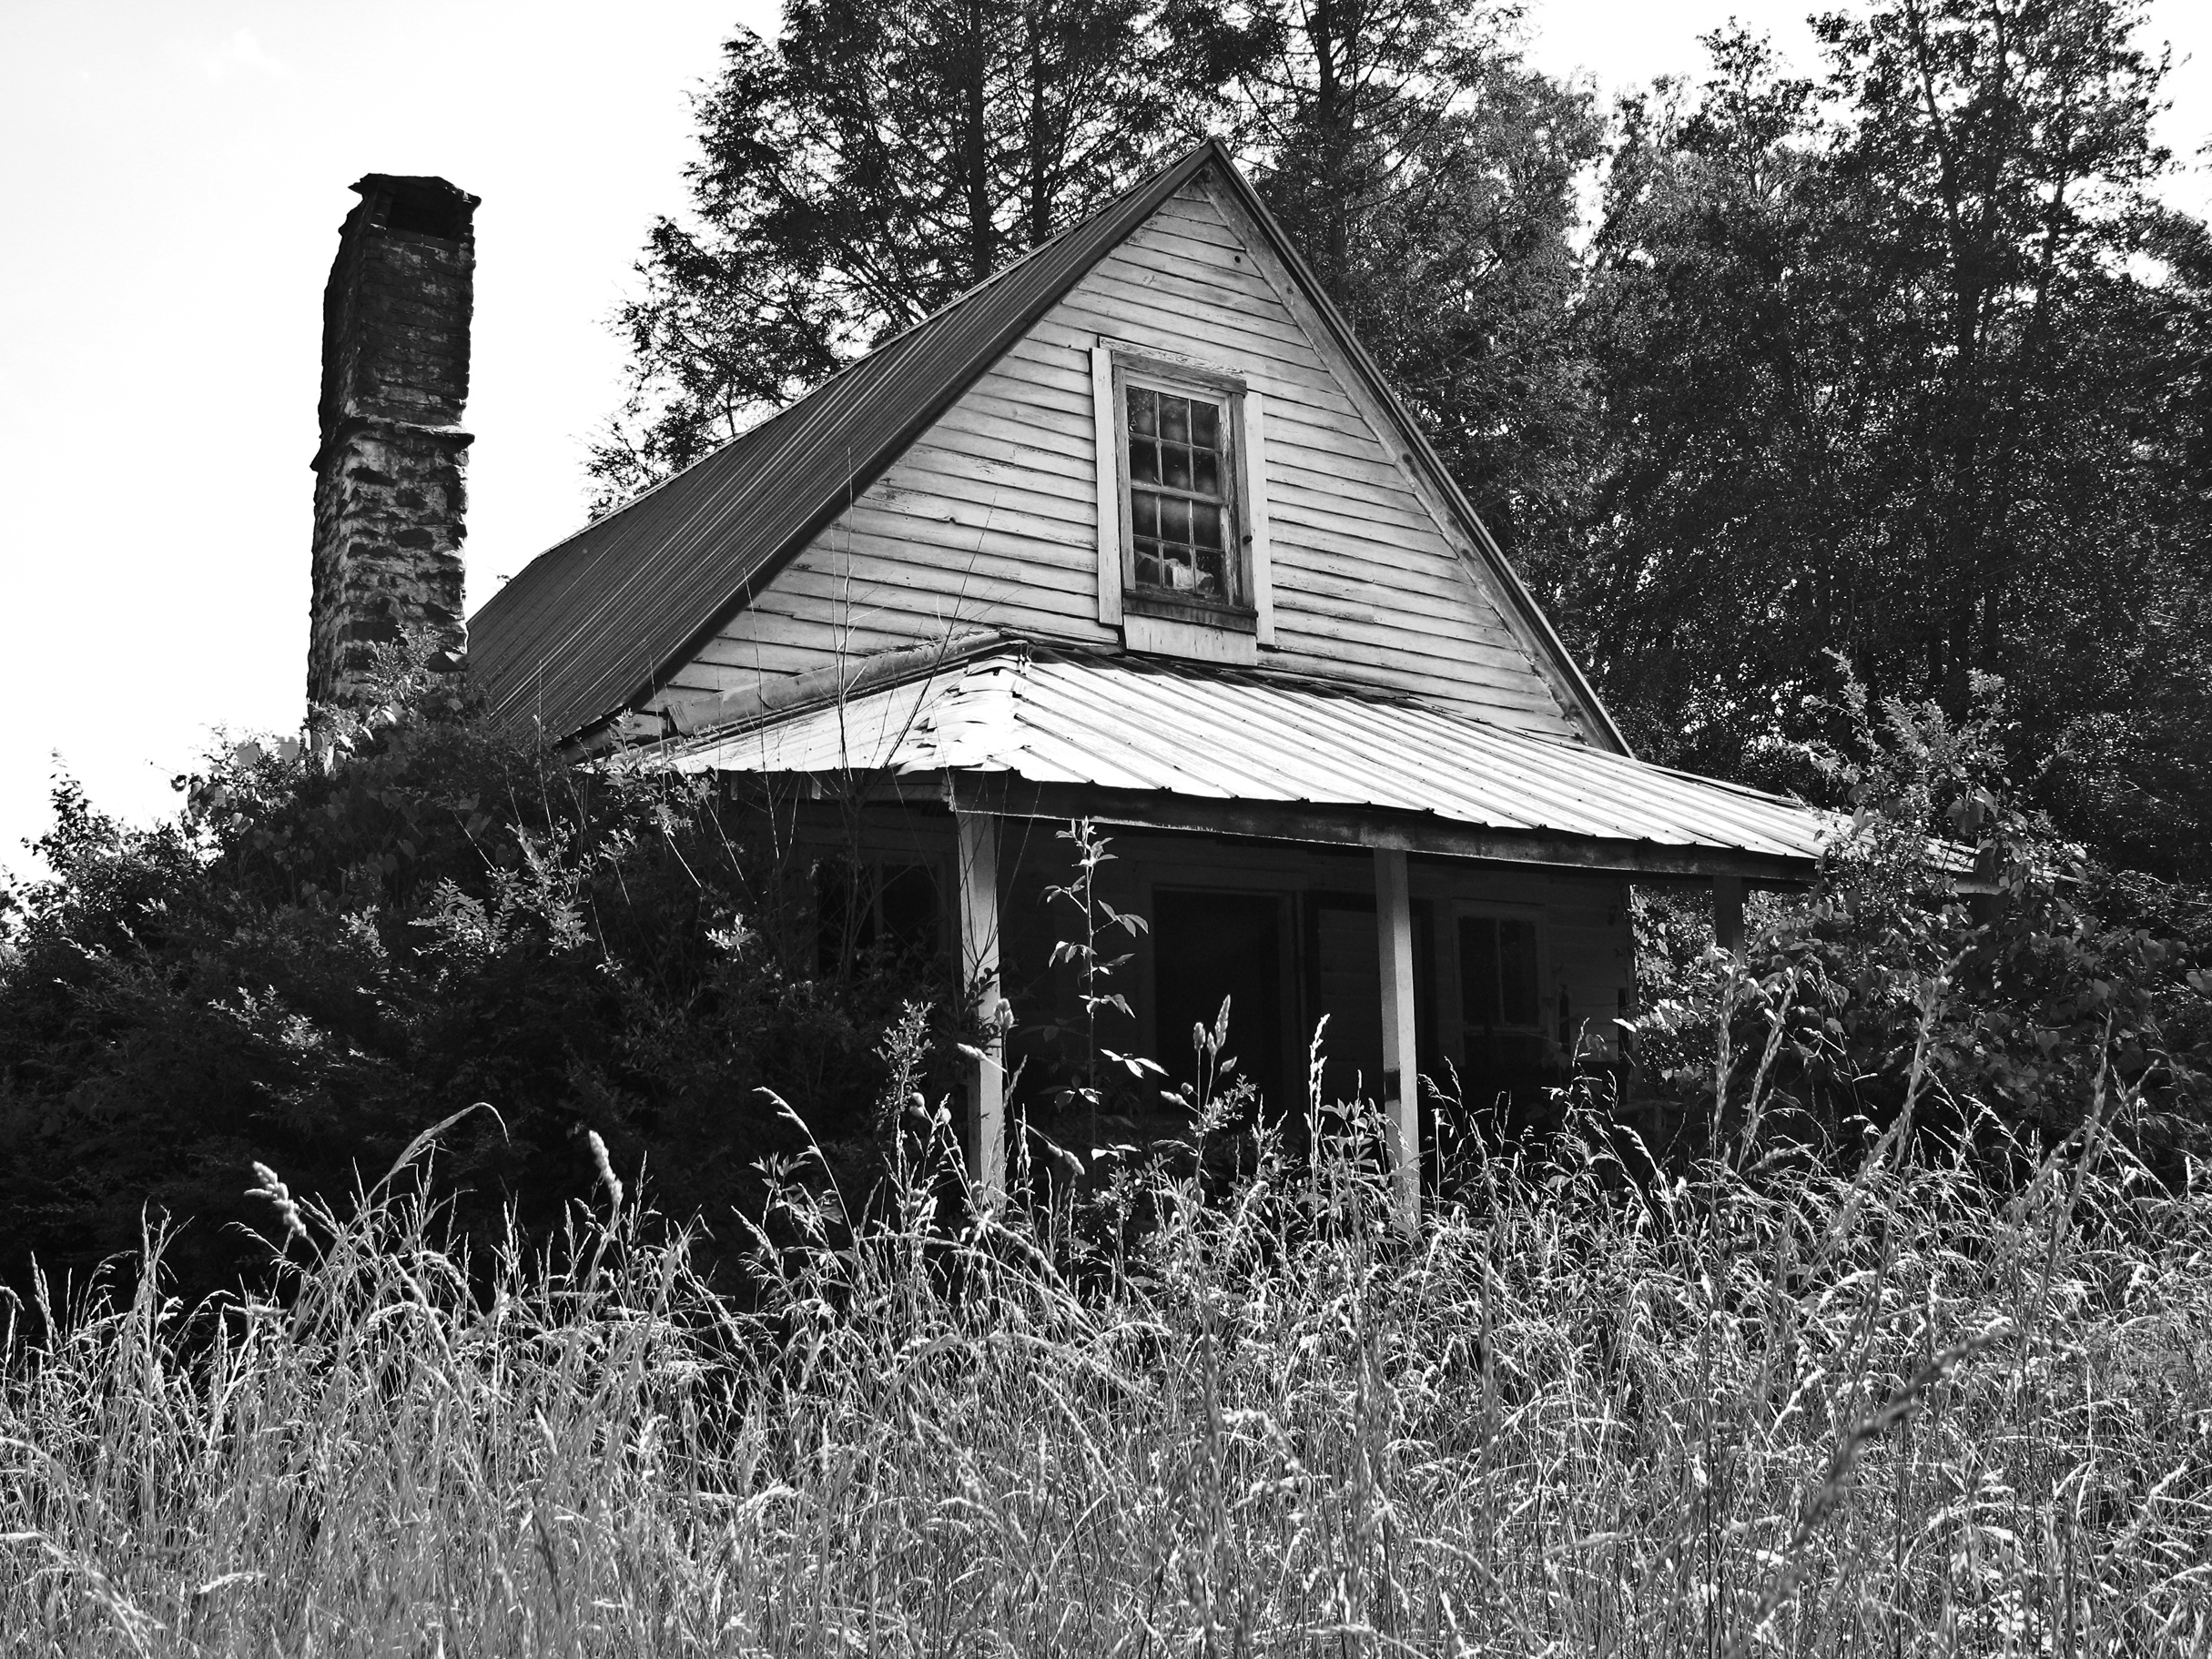    Abandoned House  , Fannin County, GA, 2013. B&amp;W HDR digital image. 